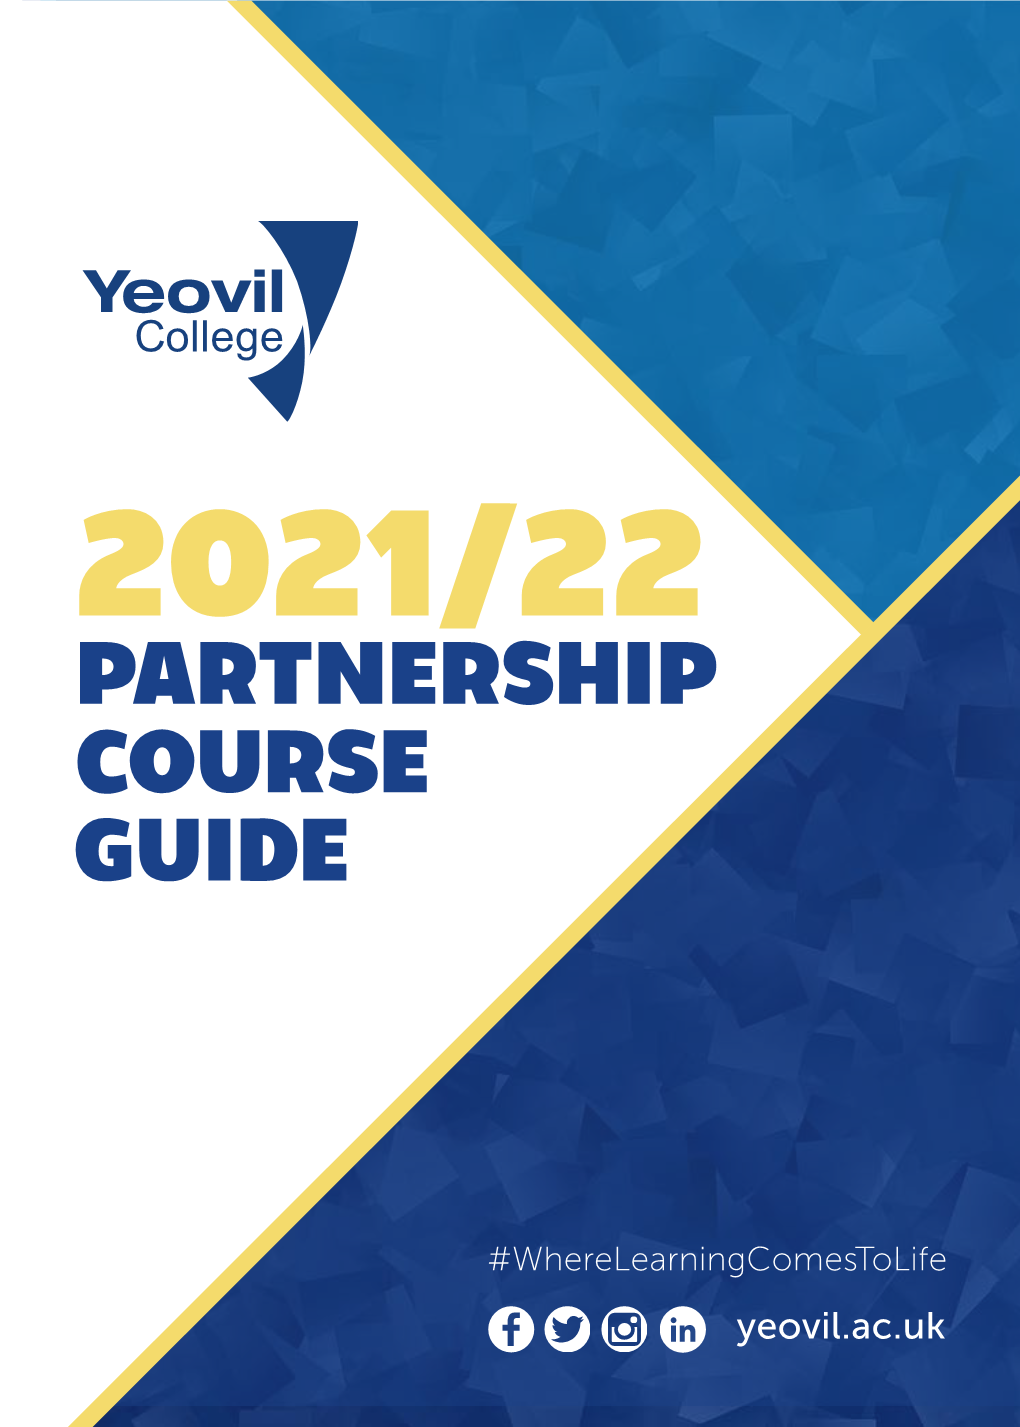 Partnership Course Guide